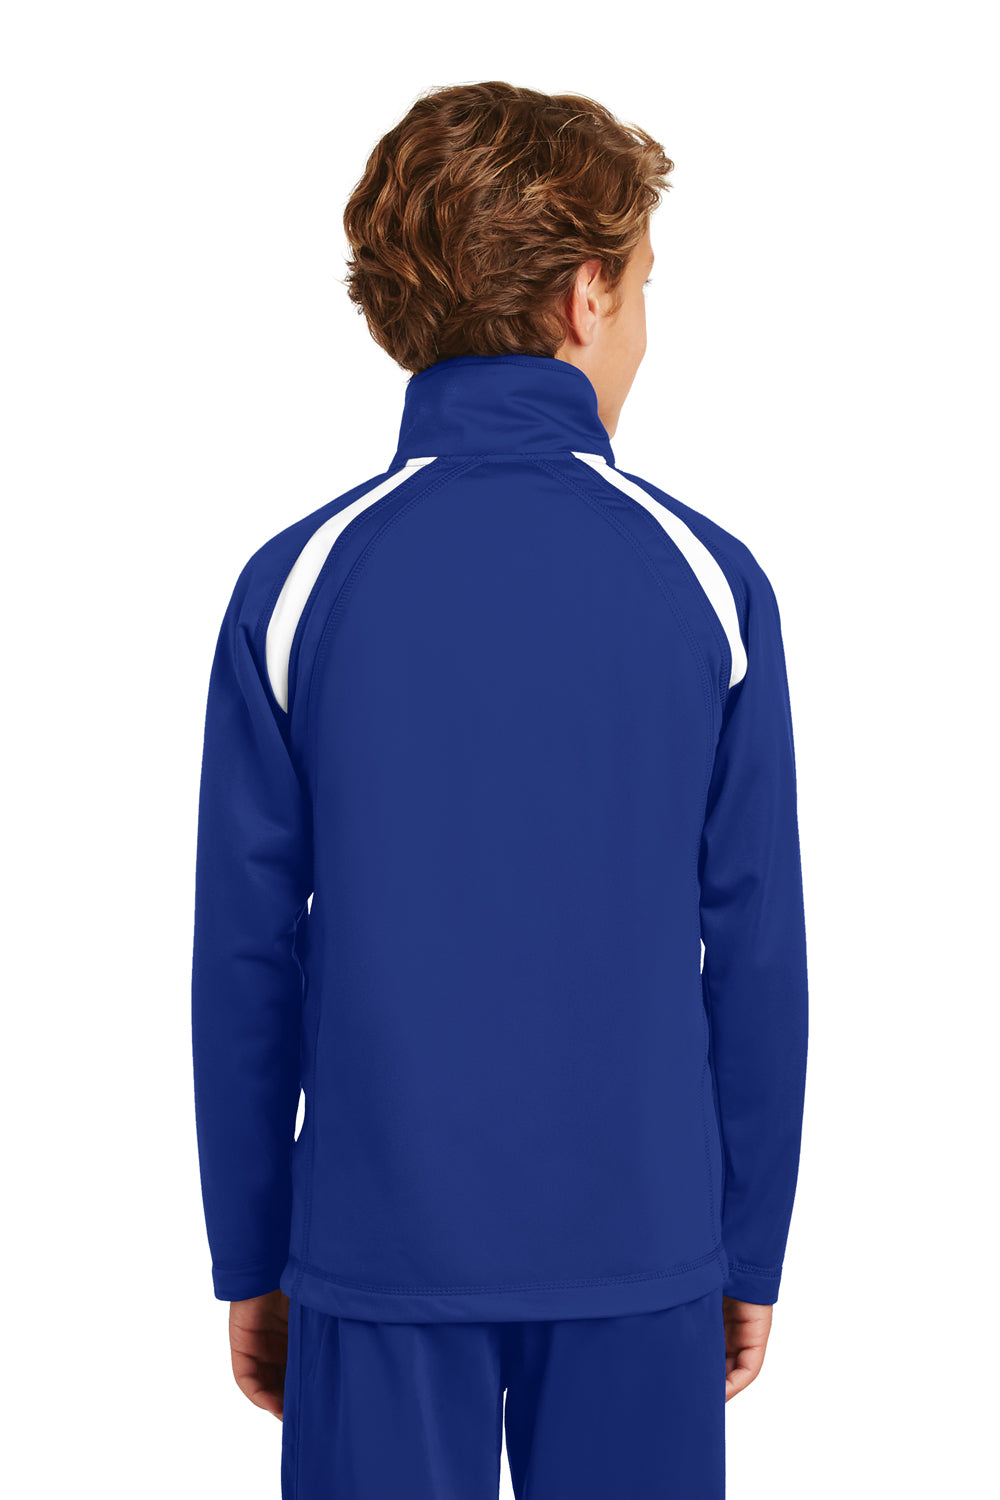 Sport-Tek YST90 Youth Full Zip Track Jacket Royal Blue Back